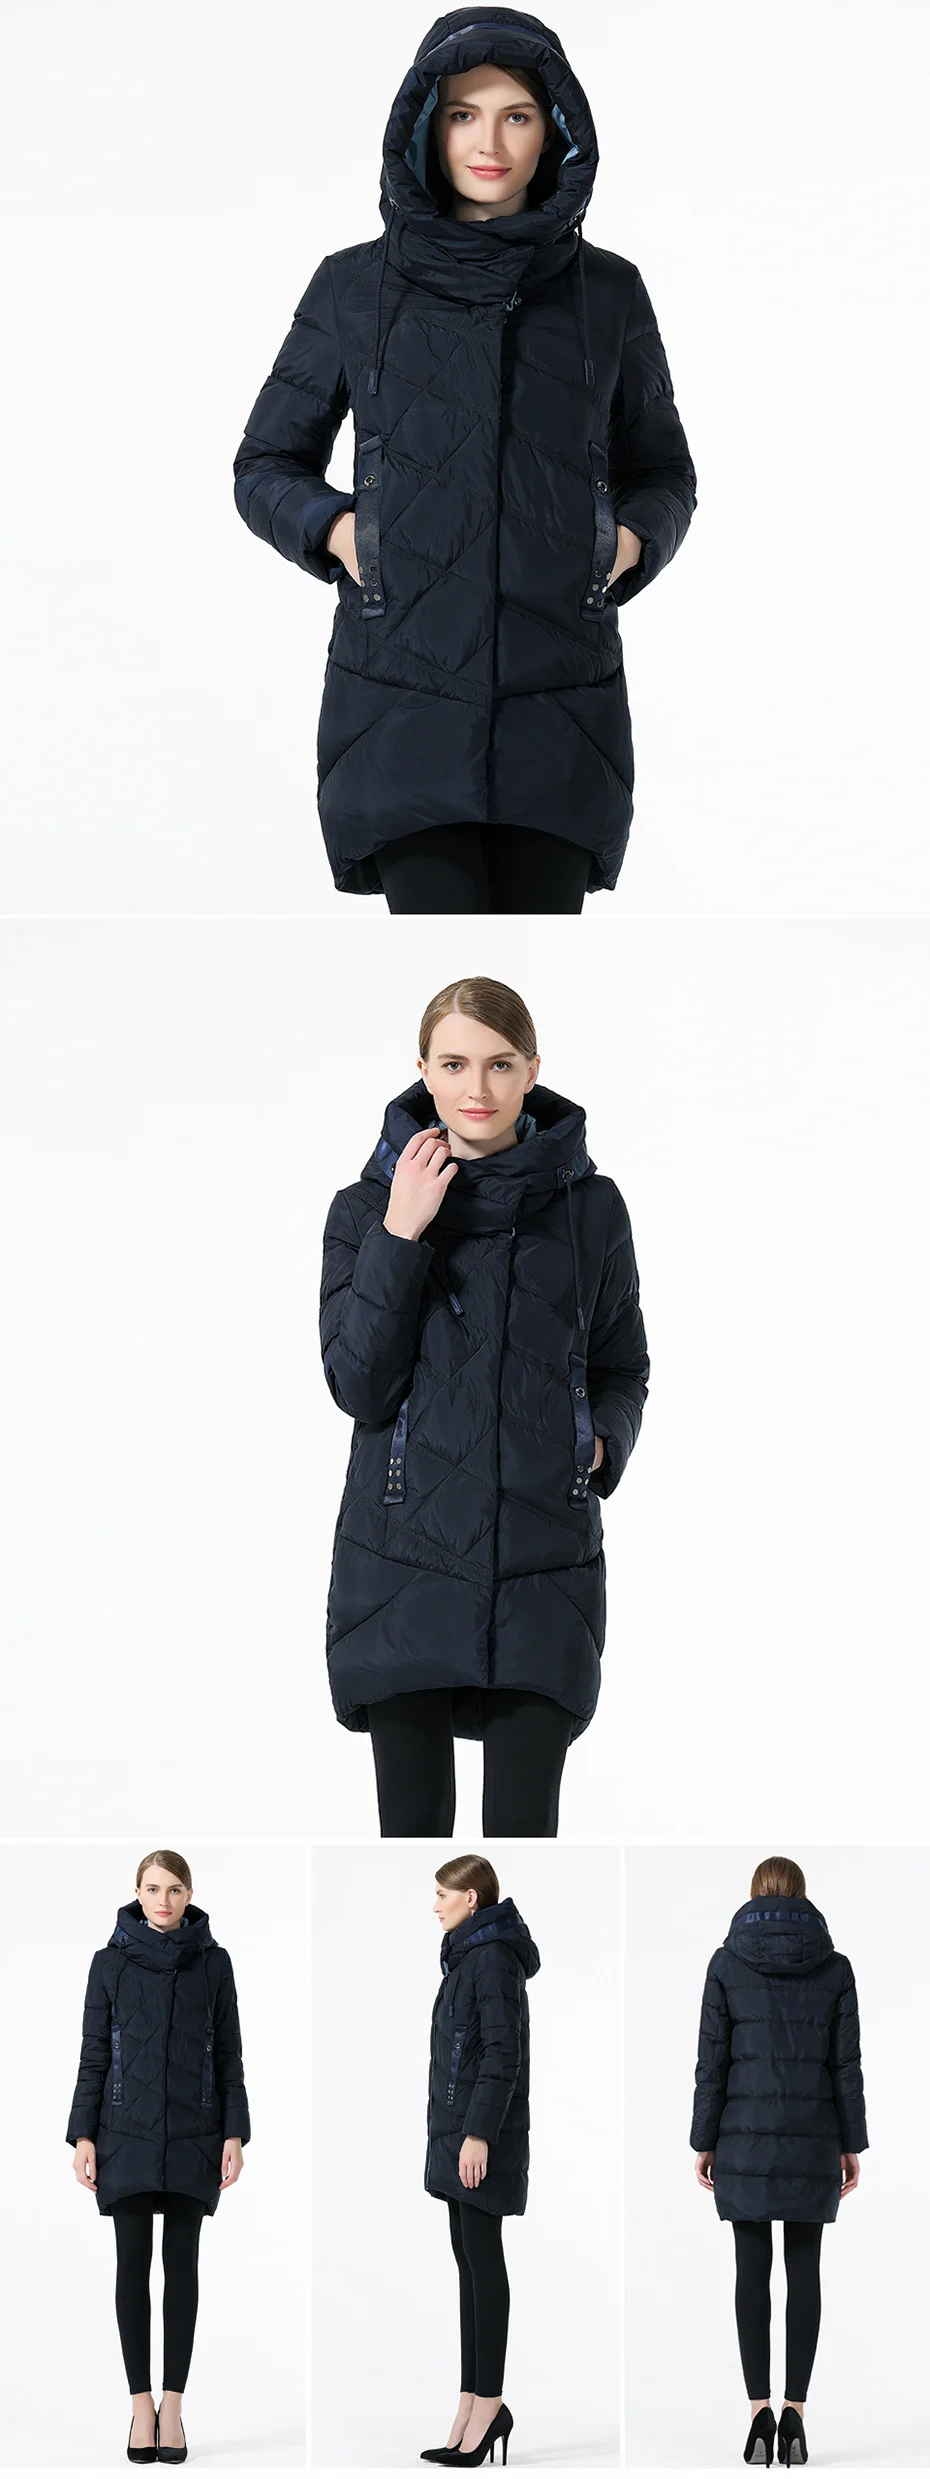 GASMAN Зимняя куртка женщин мода зимнее пальто женщины женская куртка женское пальто средней длины пуховик зиминий женсикий